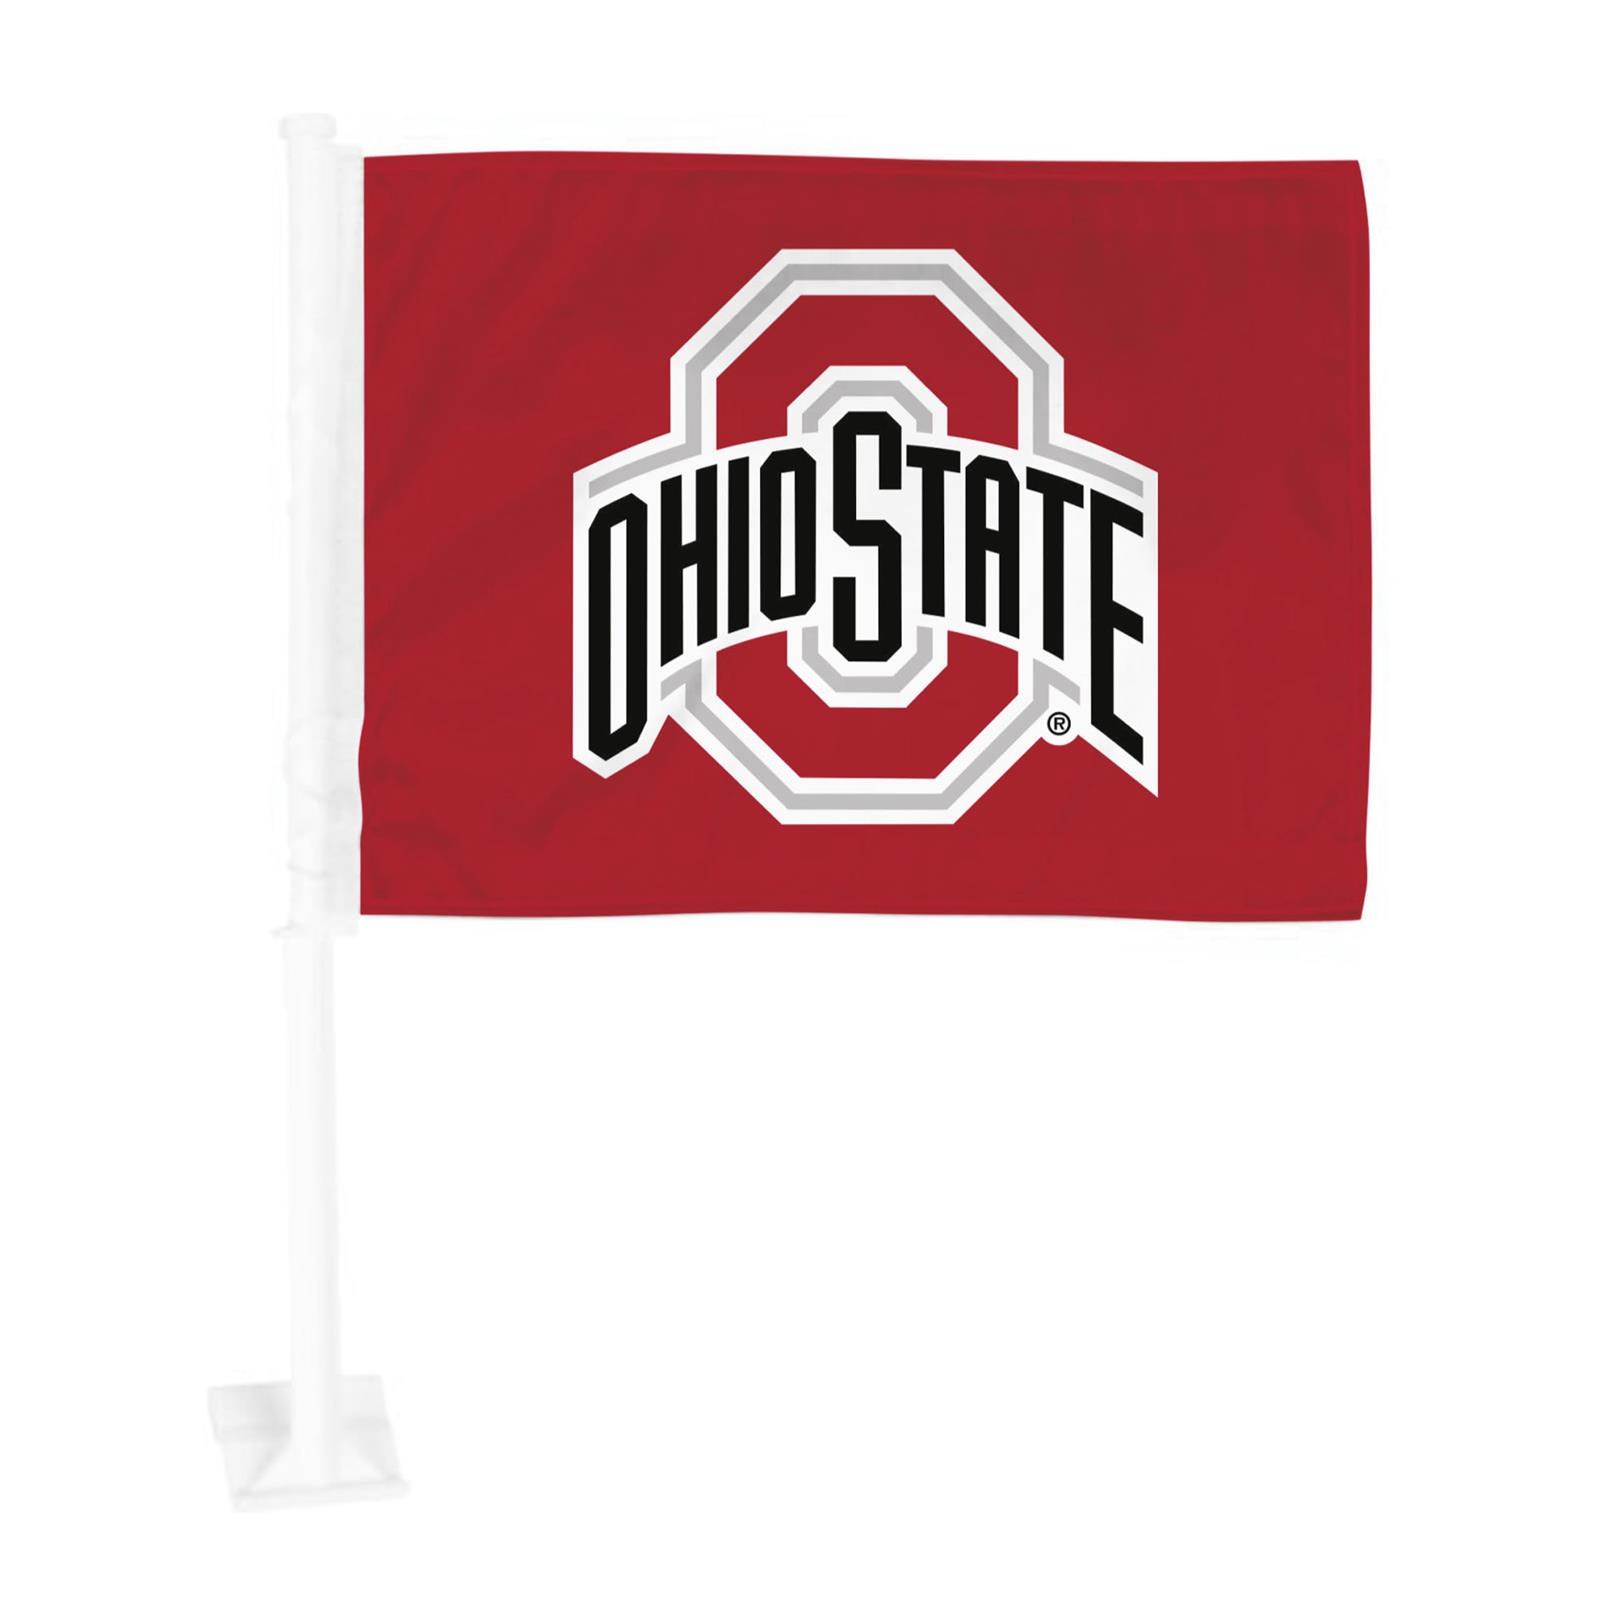 Summit Gifts 25478 Ohio State Buckeyes Car Flag